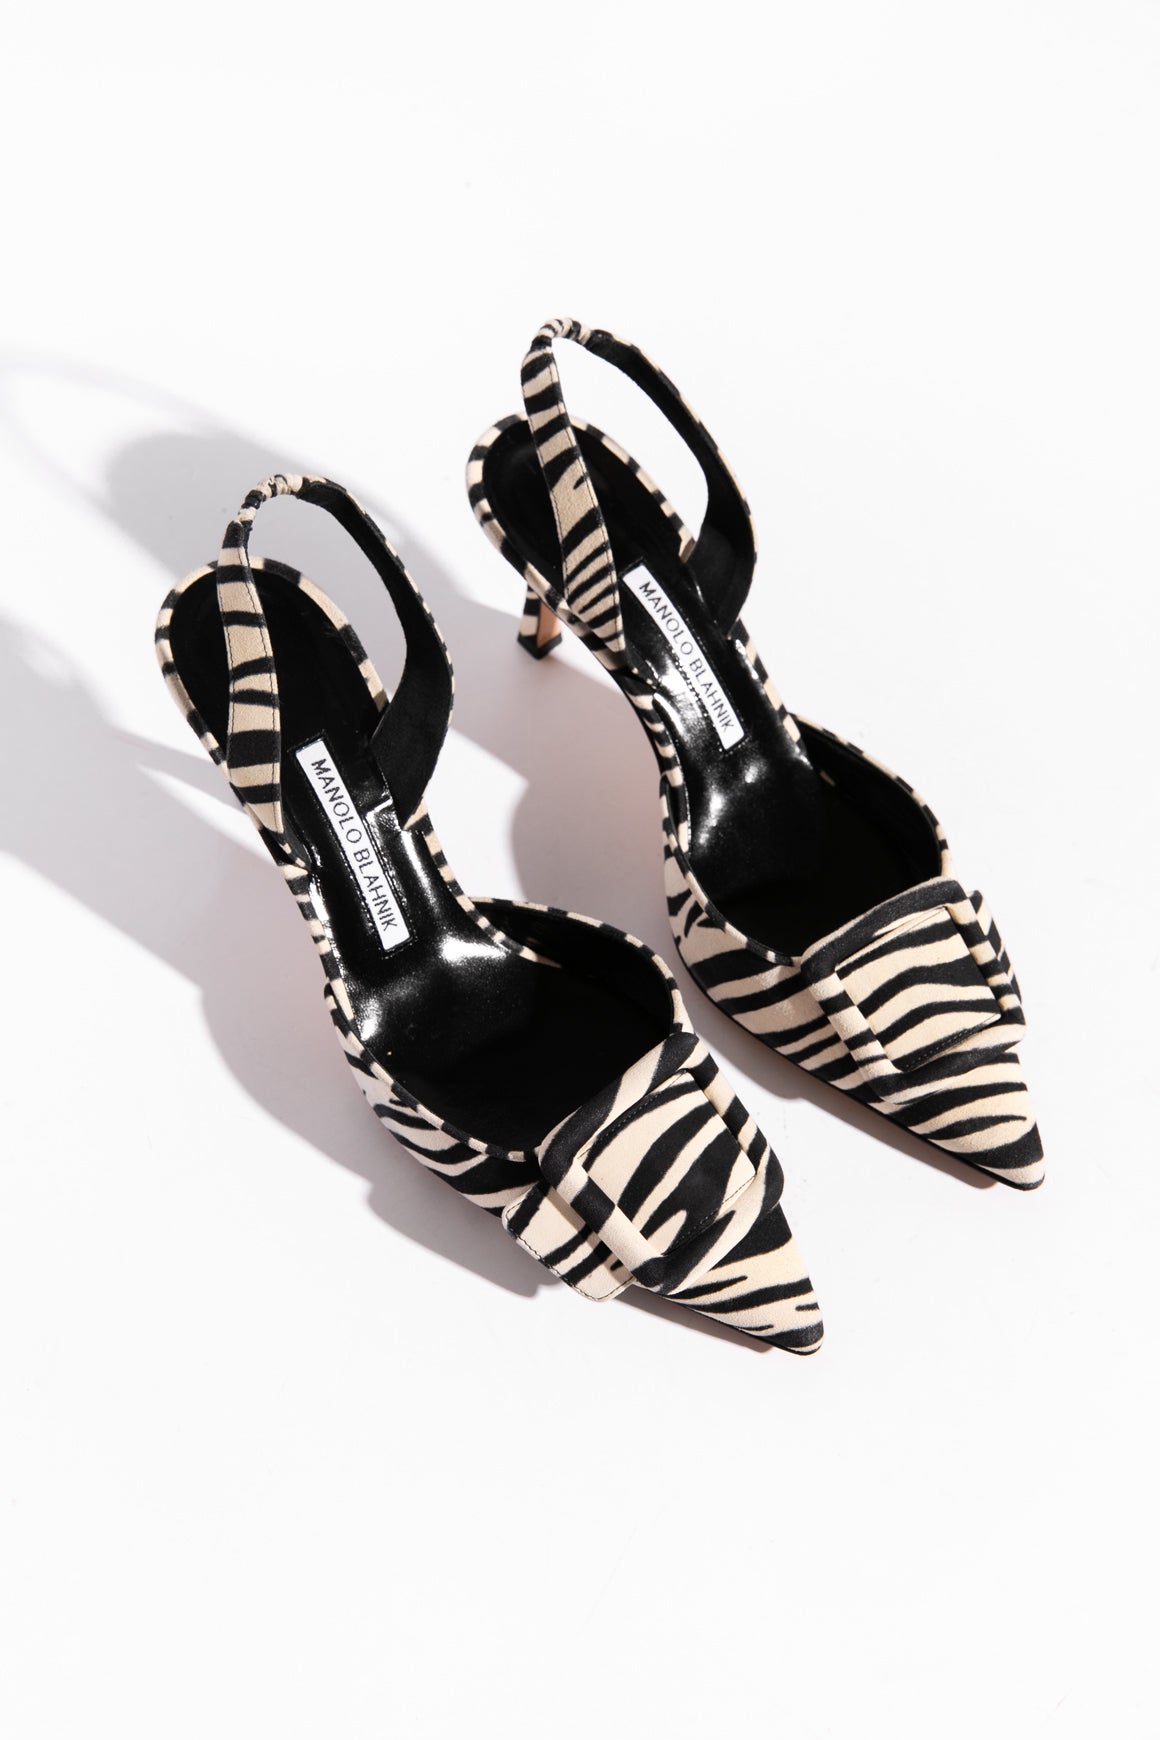 MANOLO BLAHNIK Zebra Slingback Heels (Sz. 38)